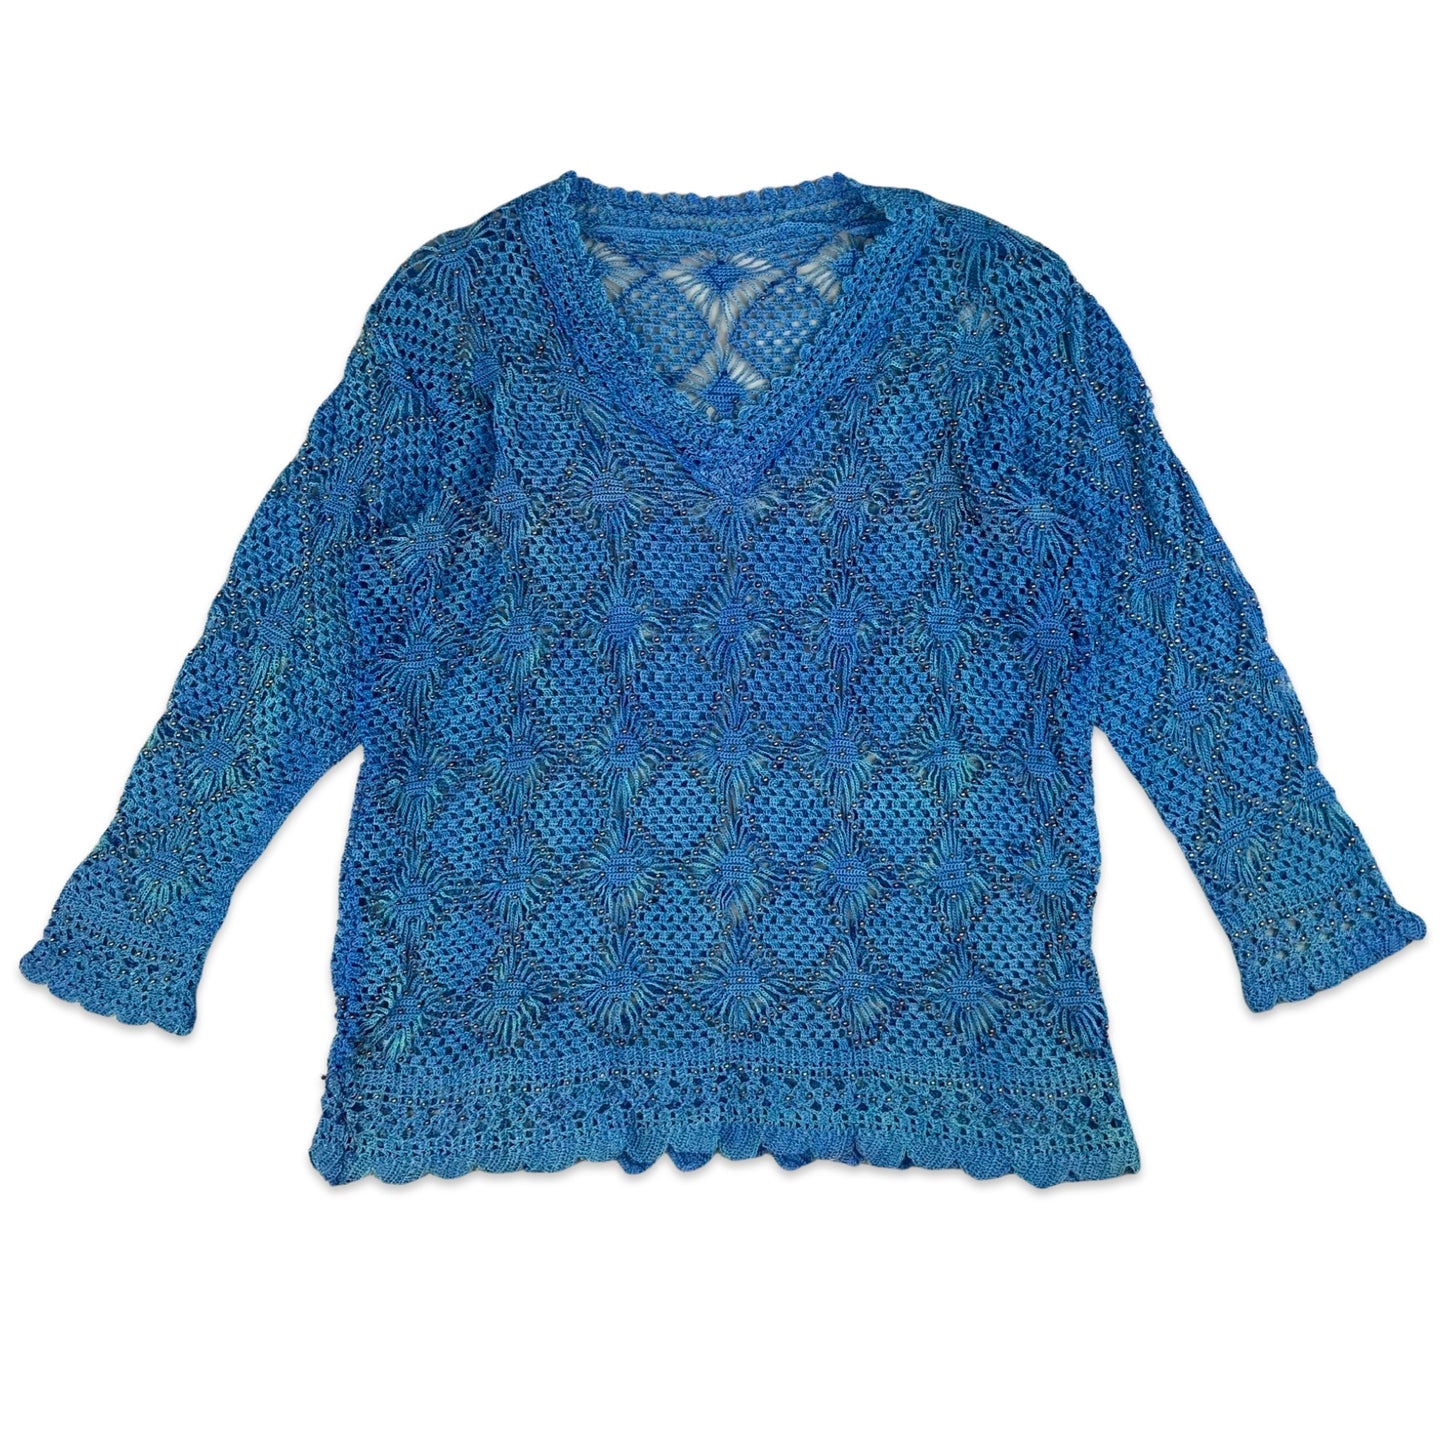 Vintage Blue Gold Crochet Sheer Tunic Top Dress